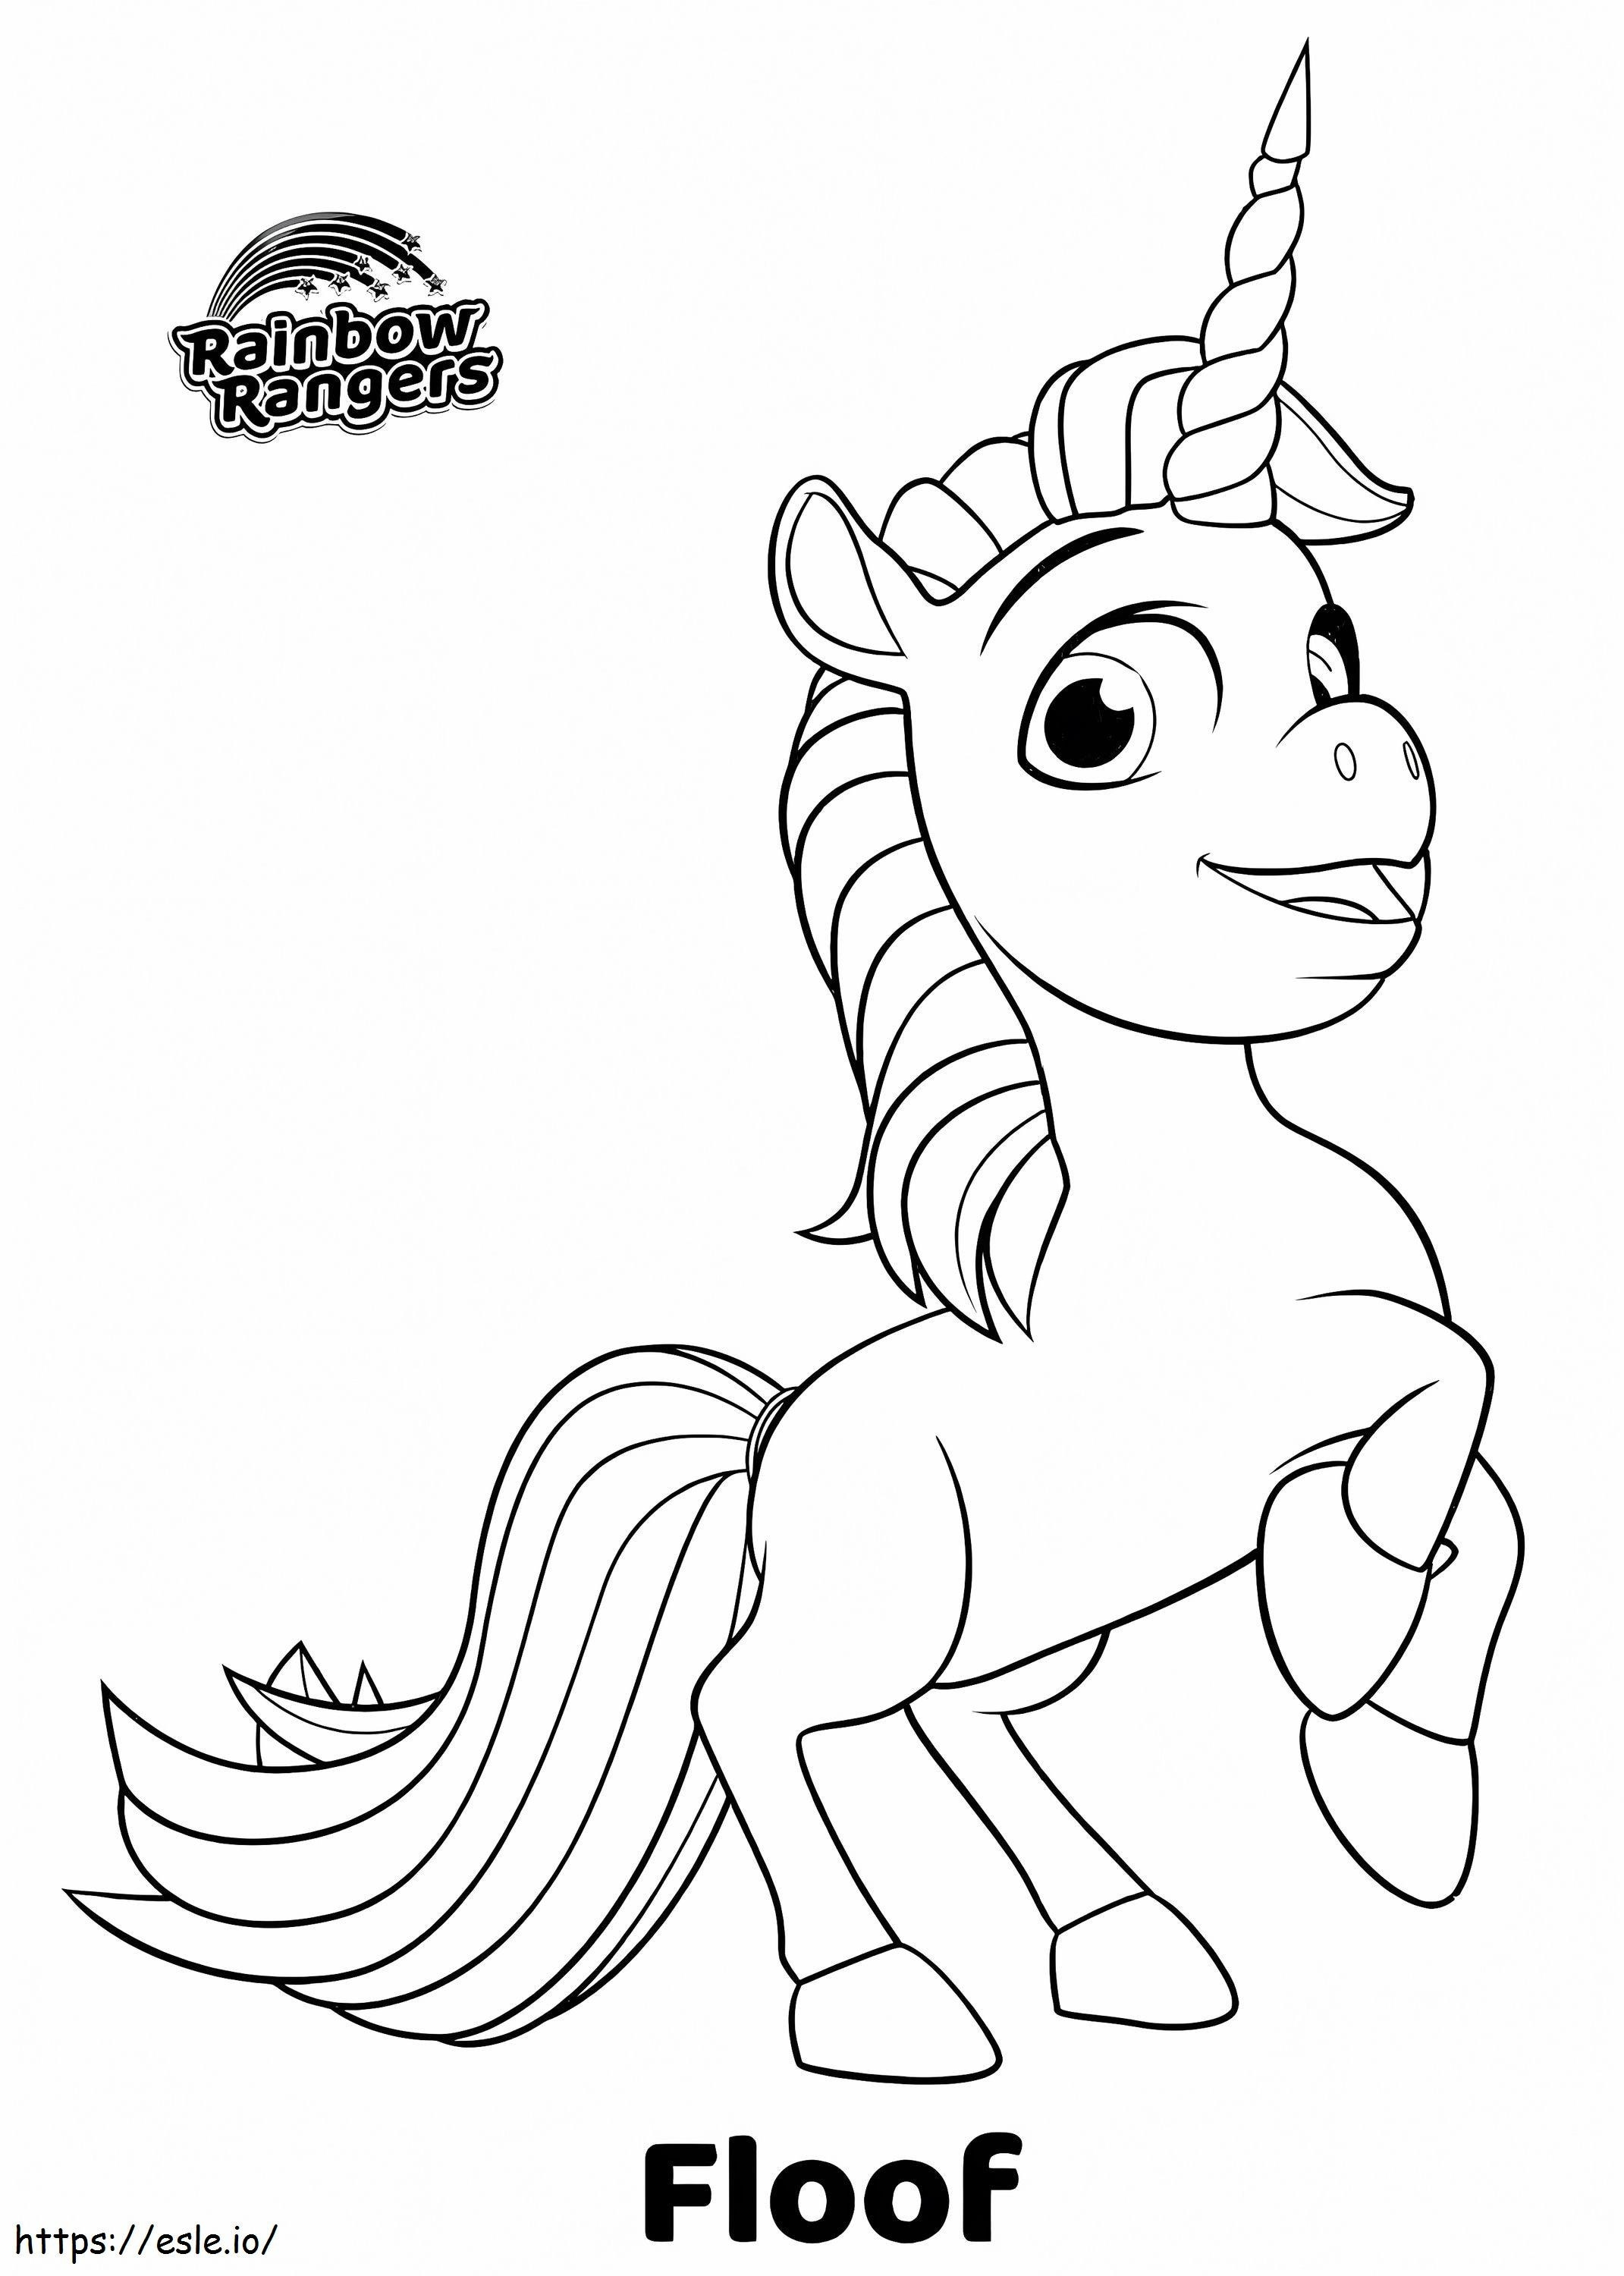  77Xwdbh Rainbow Unicorn para colorir